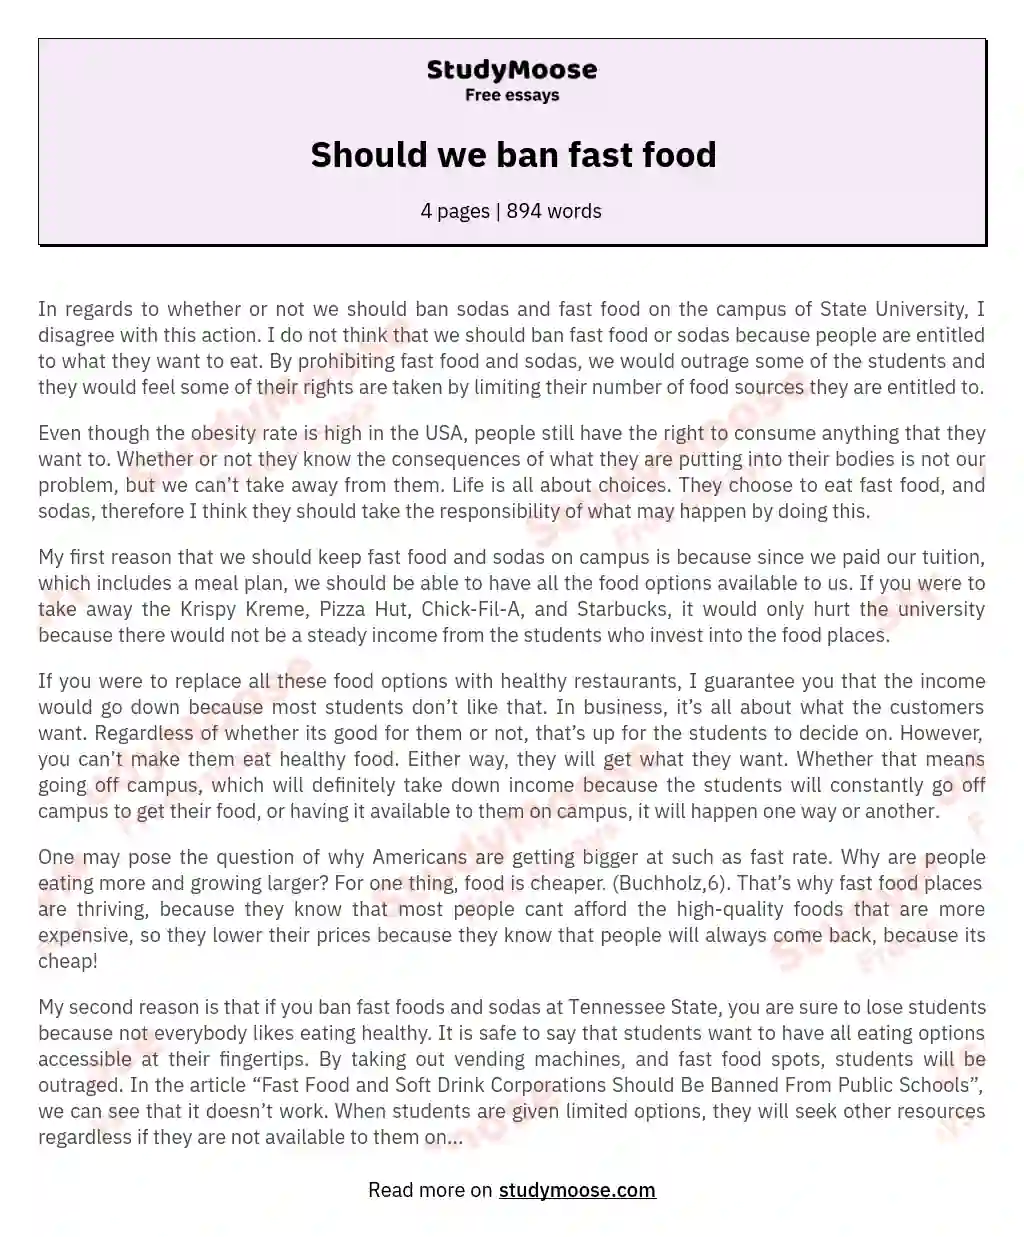 Should we ban fast food essay